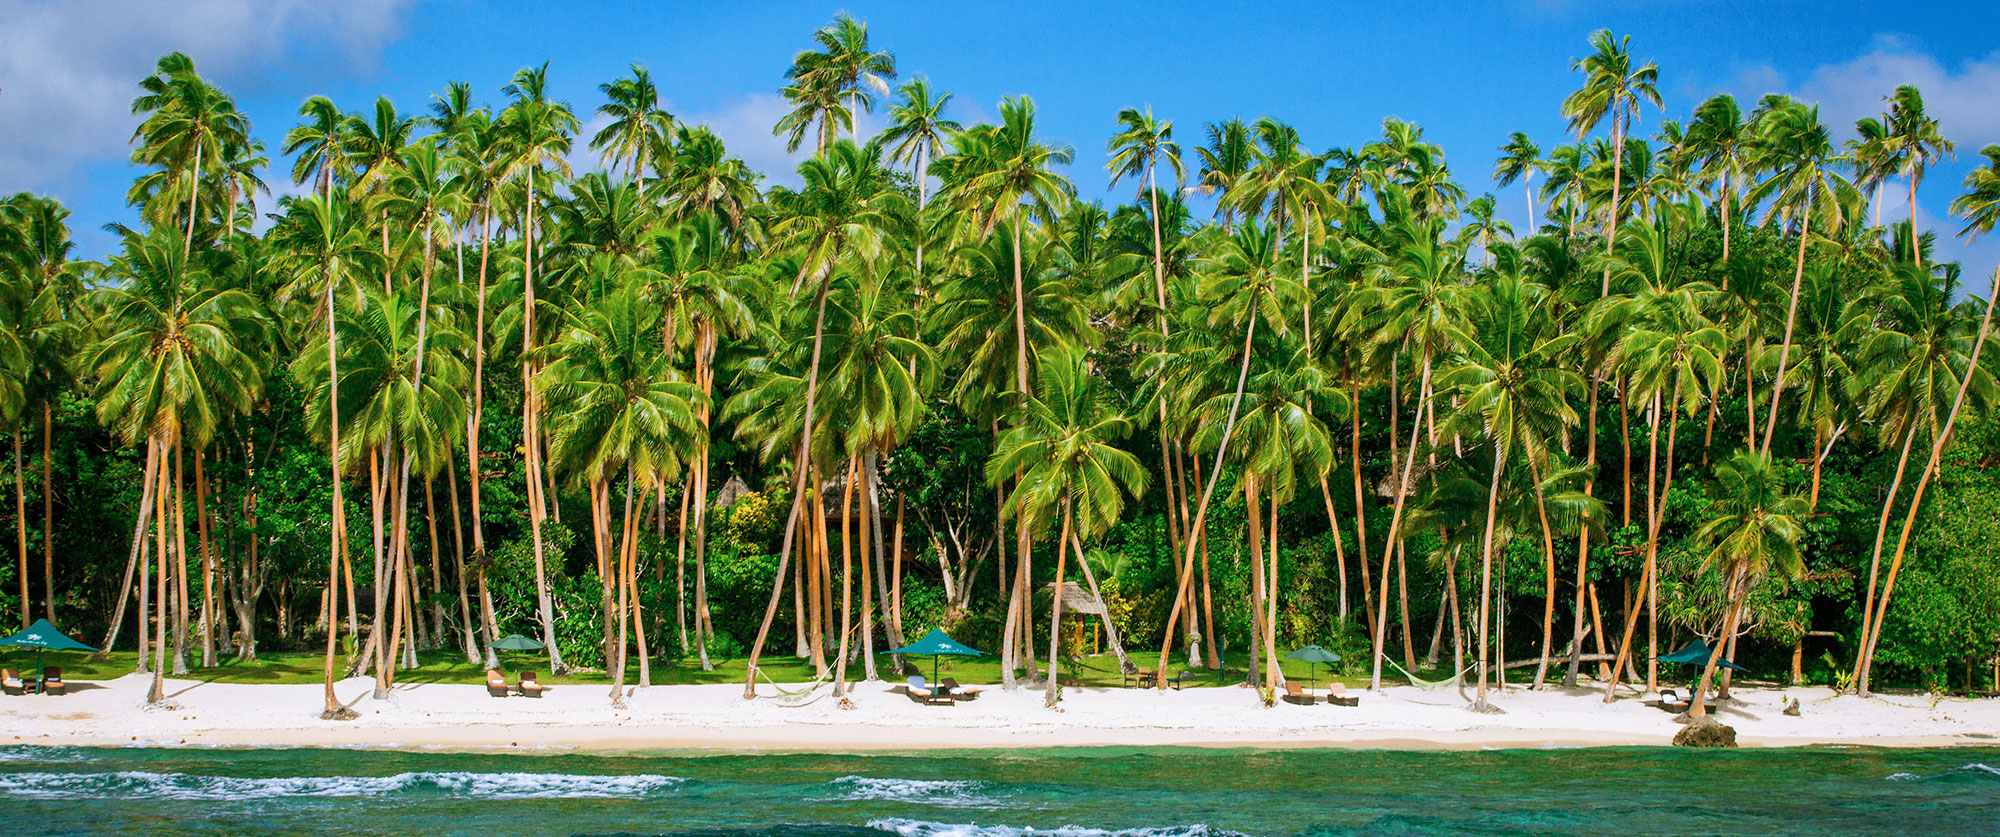 Namale Resort Fiji - Fiji Beach Holiday - Luxury Resorts